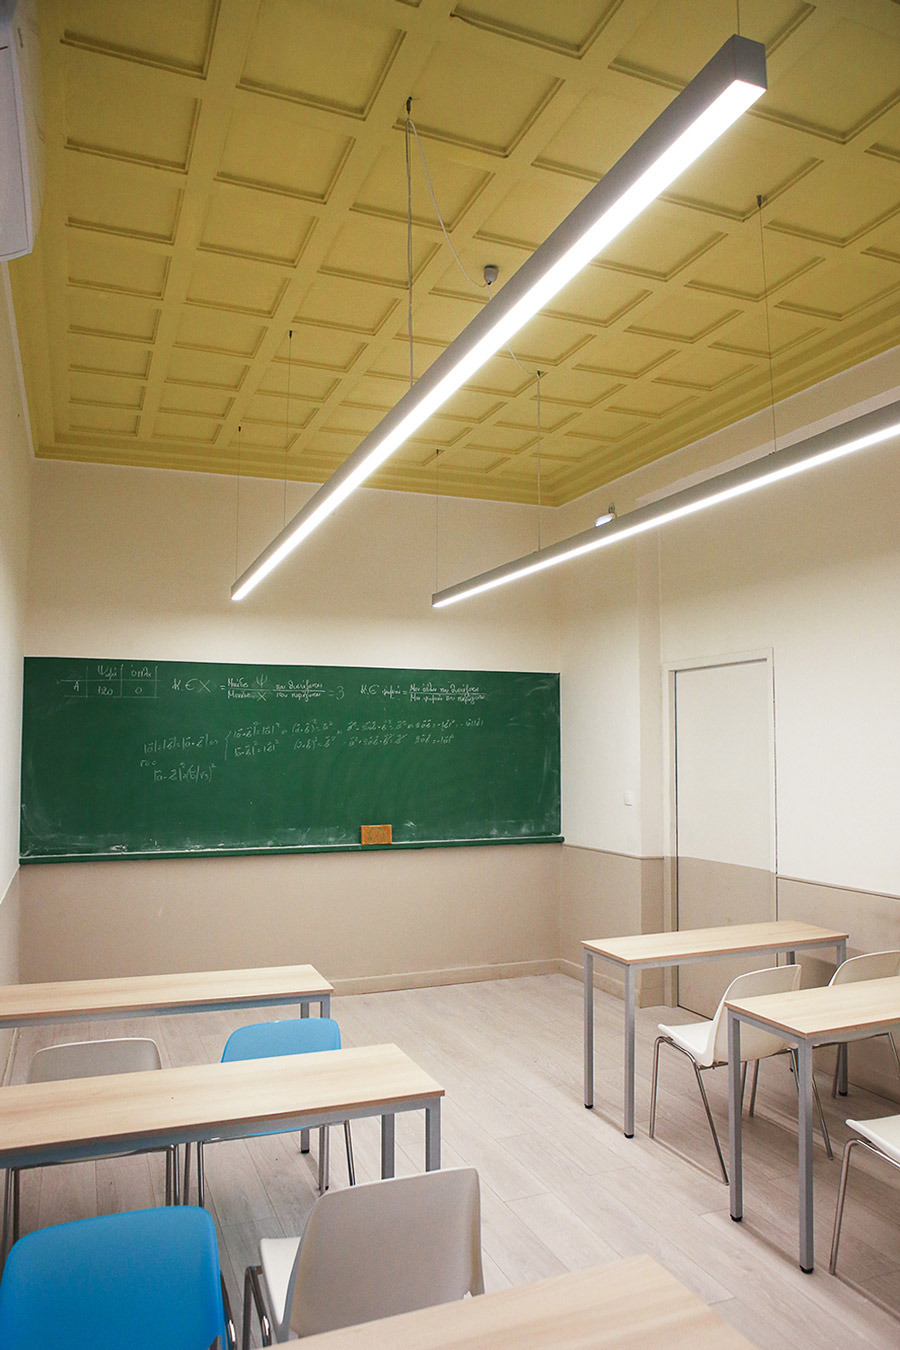 Rectangular gypsum ceiling, green blackboard, warm grey vinyl floor and grey wall are components of this classroom